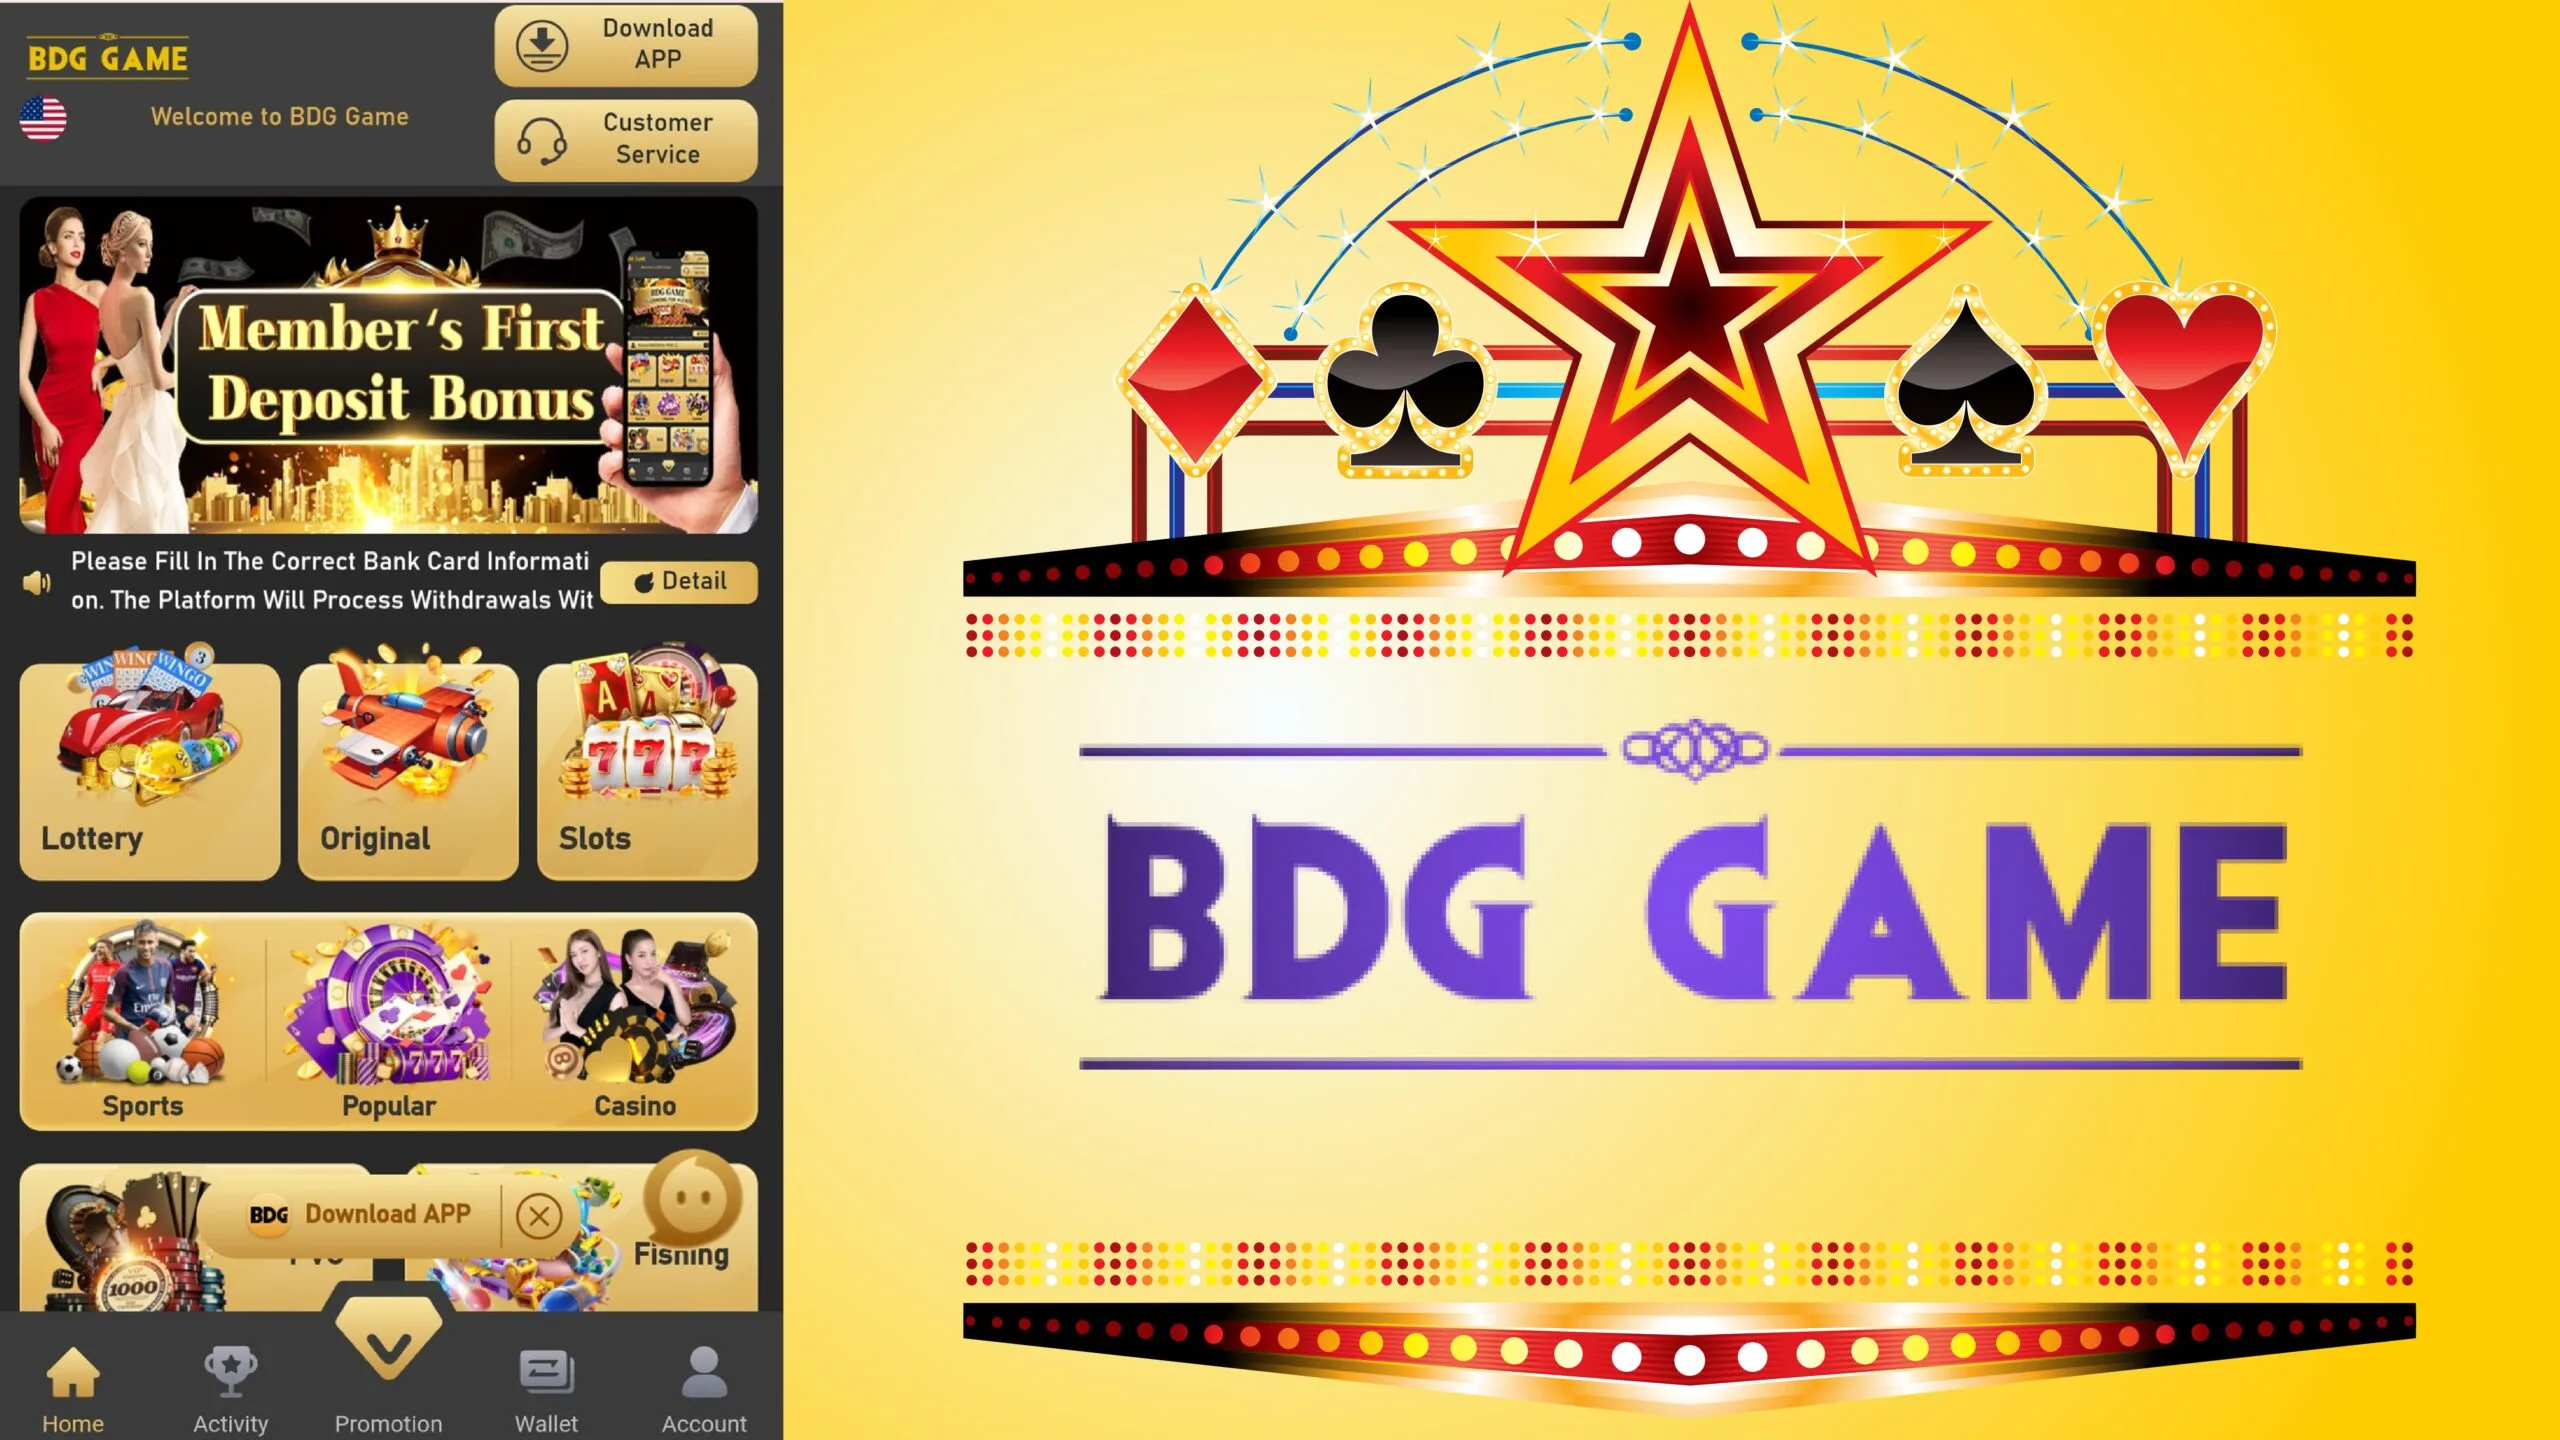 BDG Game App Cover